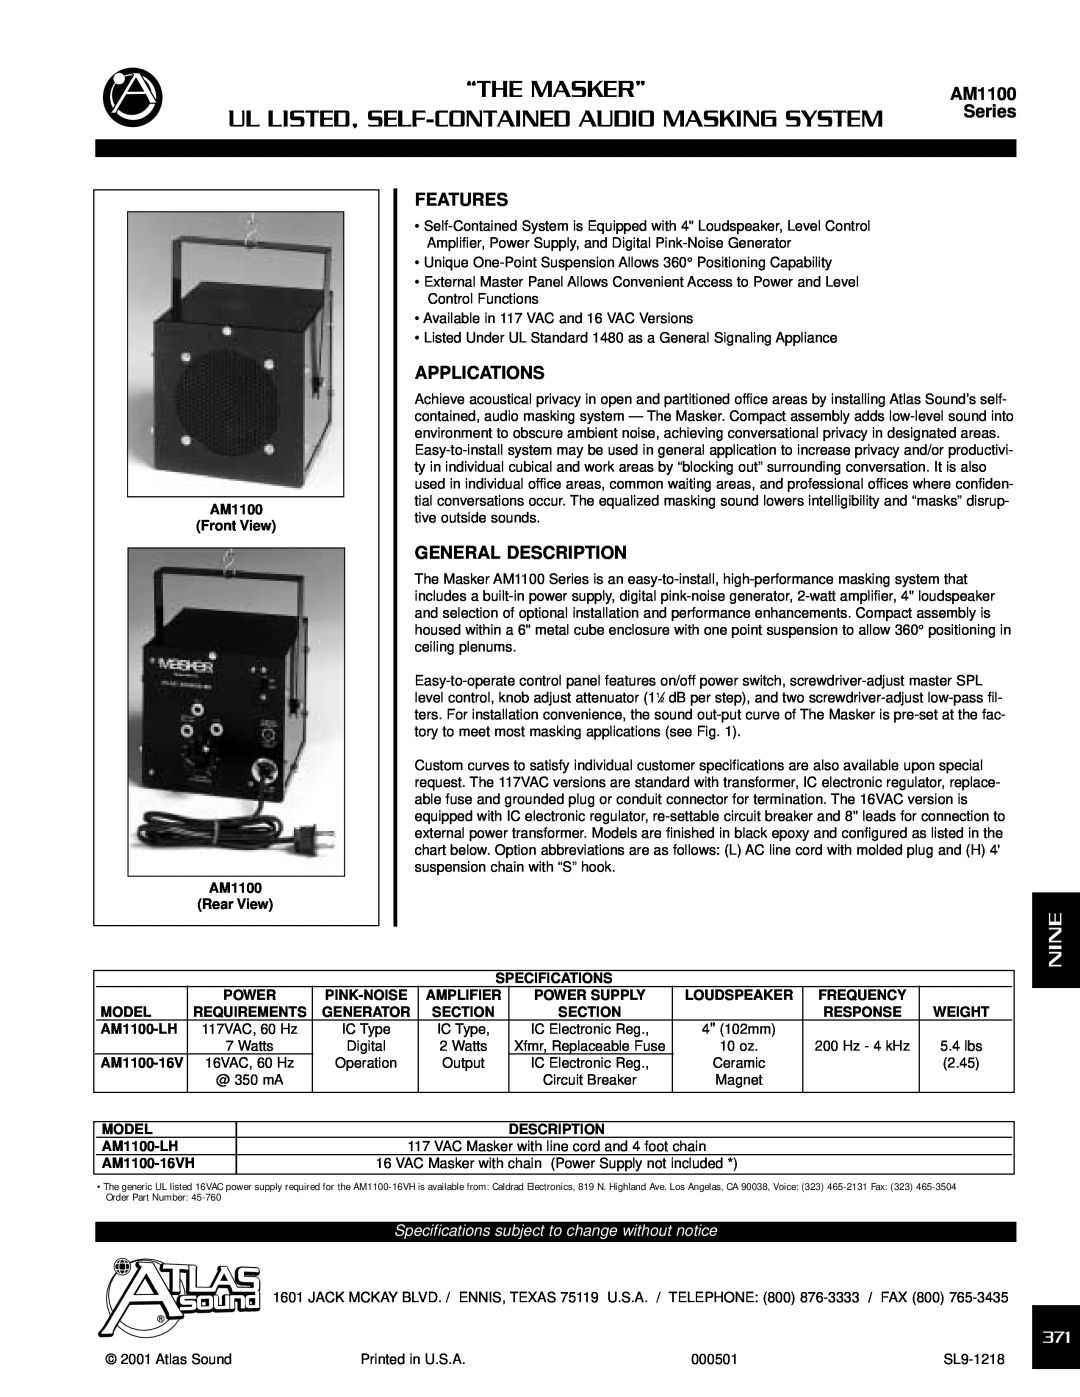 Atlas Sound AM1100 specifications Series, Features, Applications, General Description, “The Masker”, Nine 